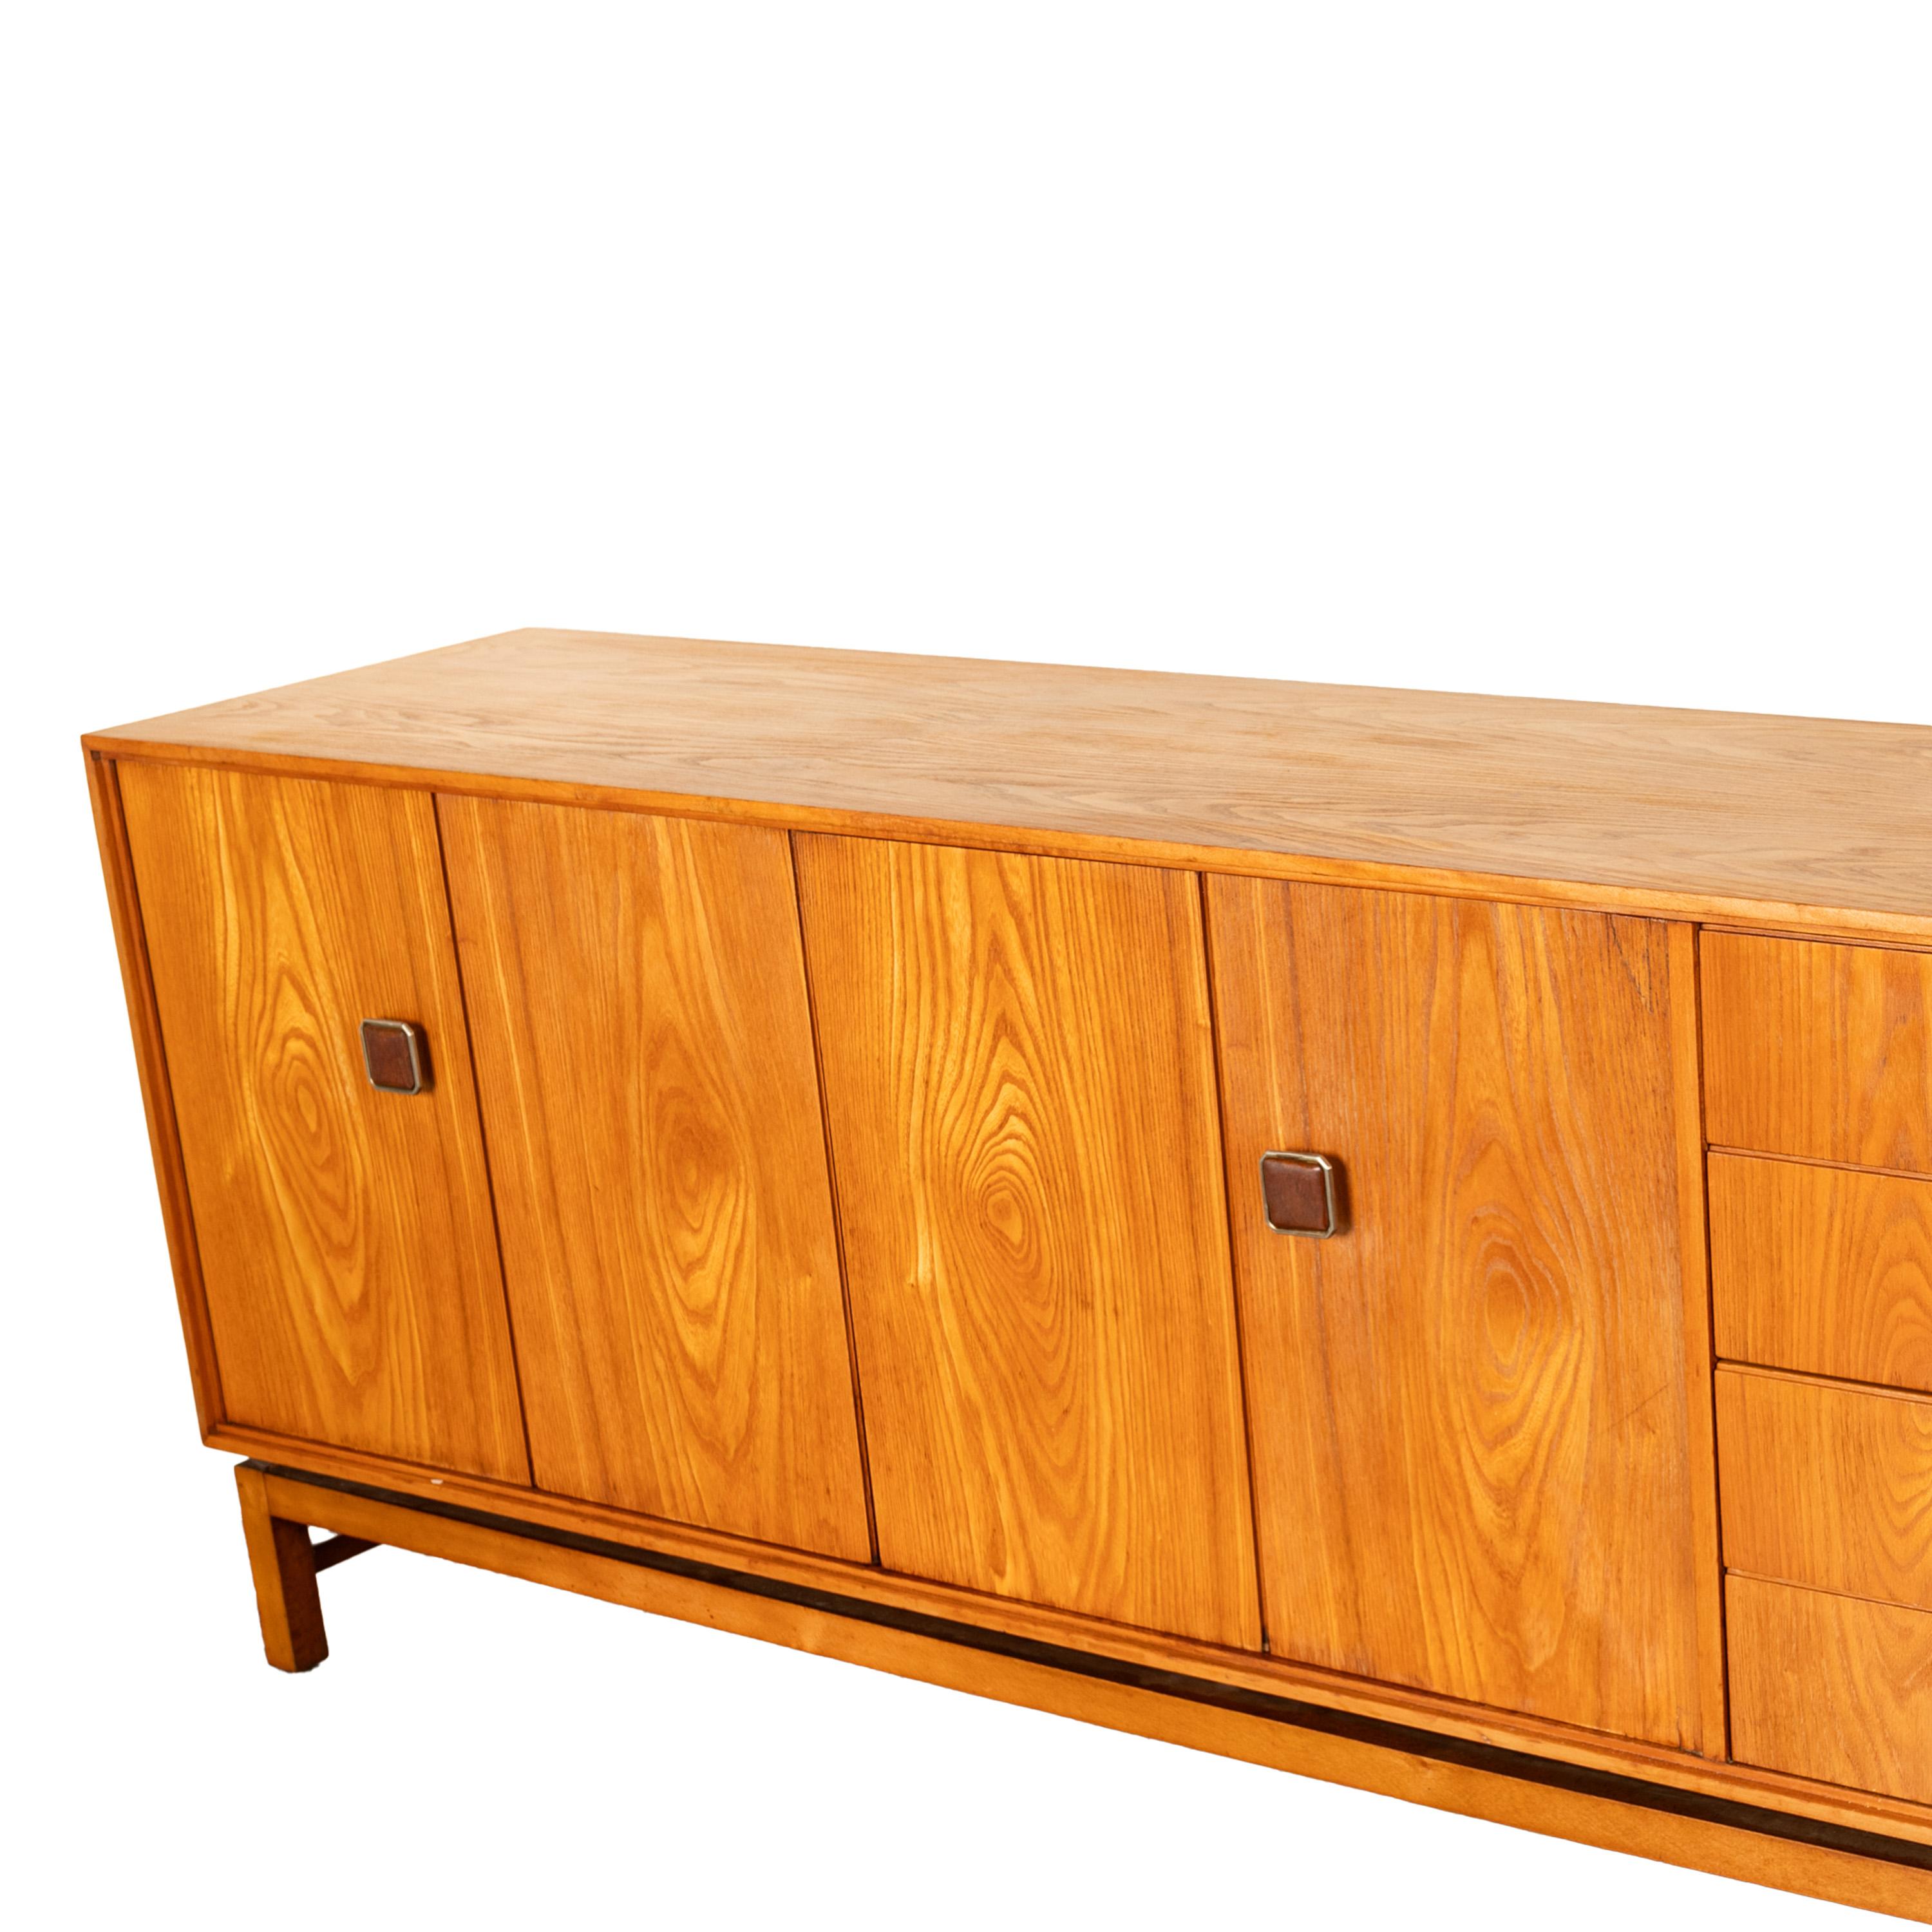 Original Danish Mid Century Modern Teak Credenza Sideboard Cabinet 6' Long 1960  12